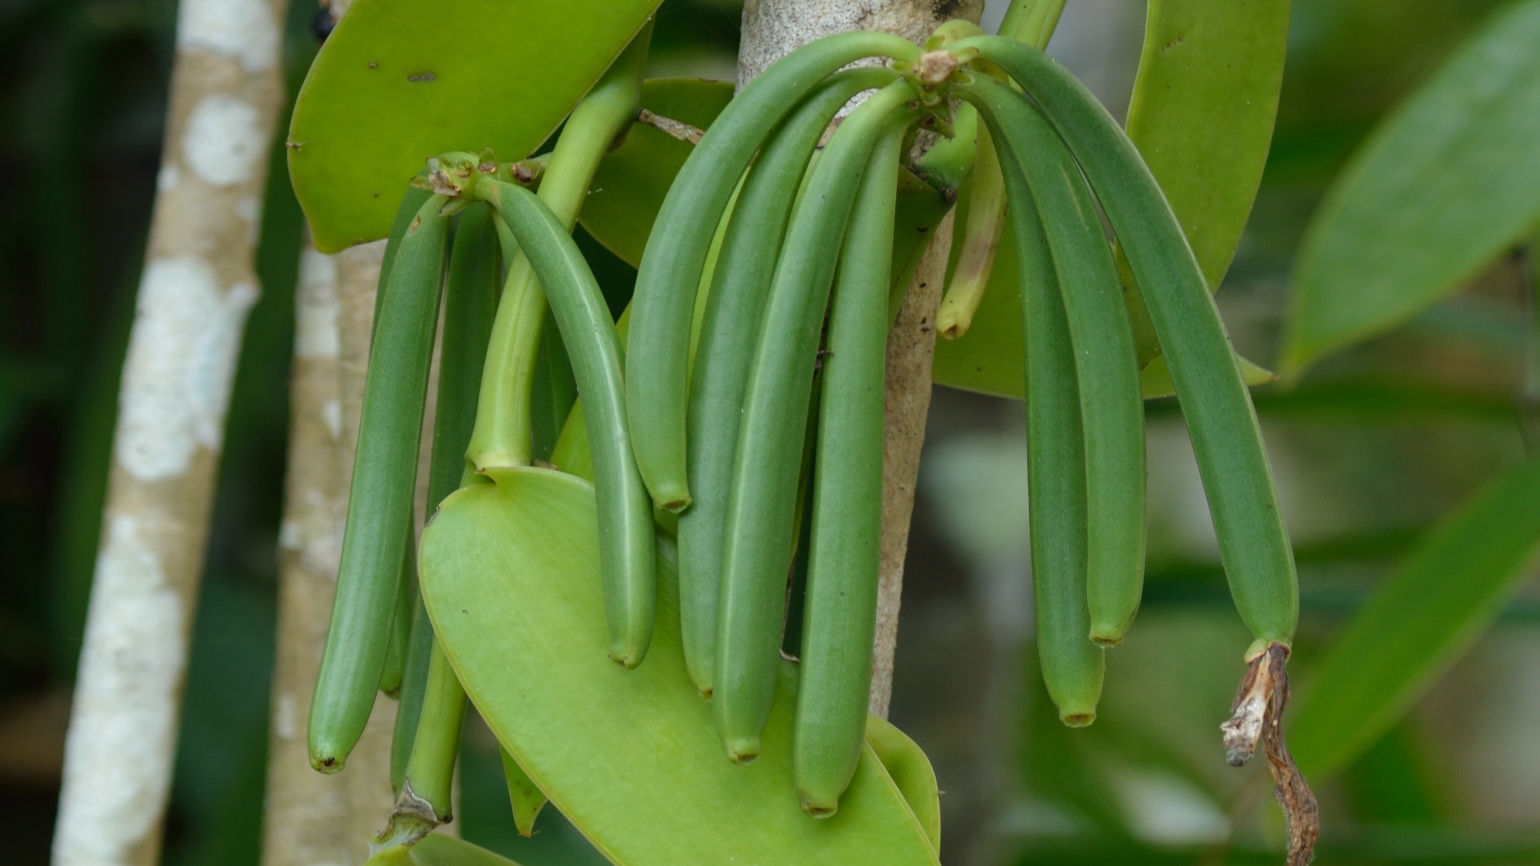 Long and green fruits of vanilla plant